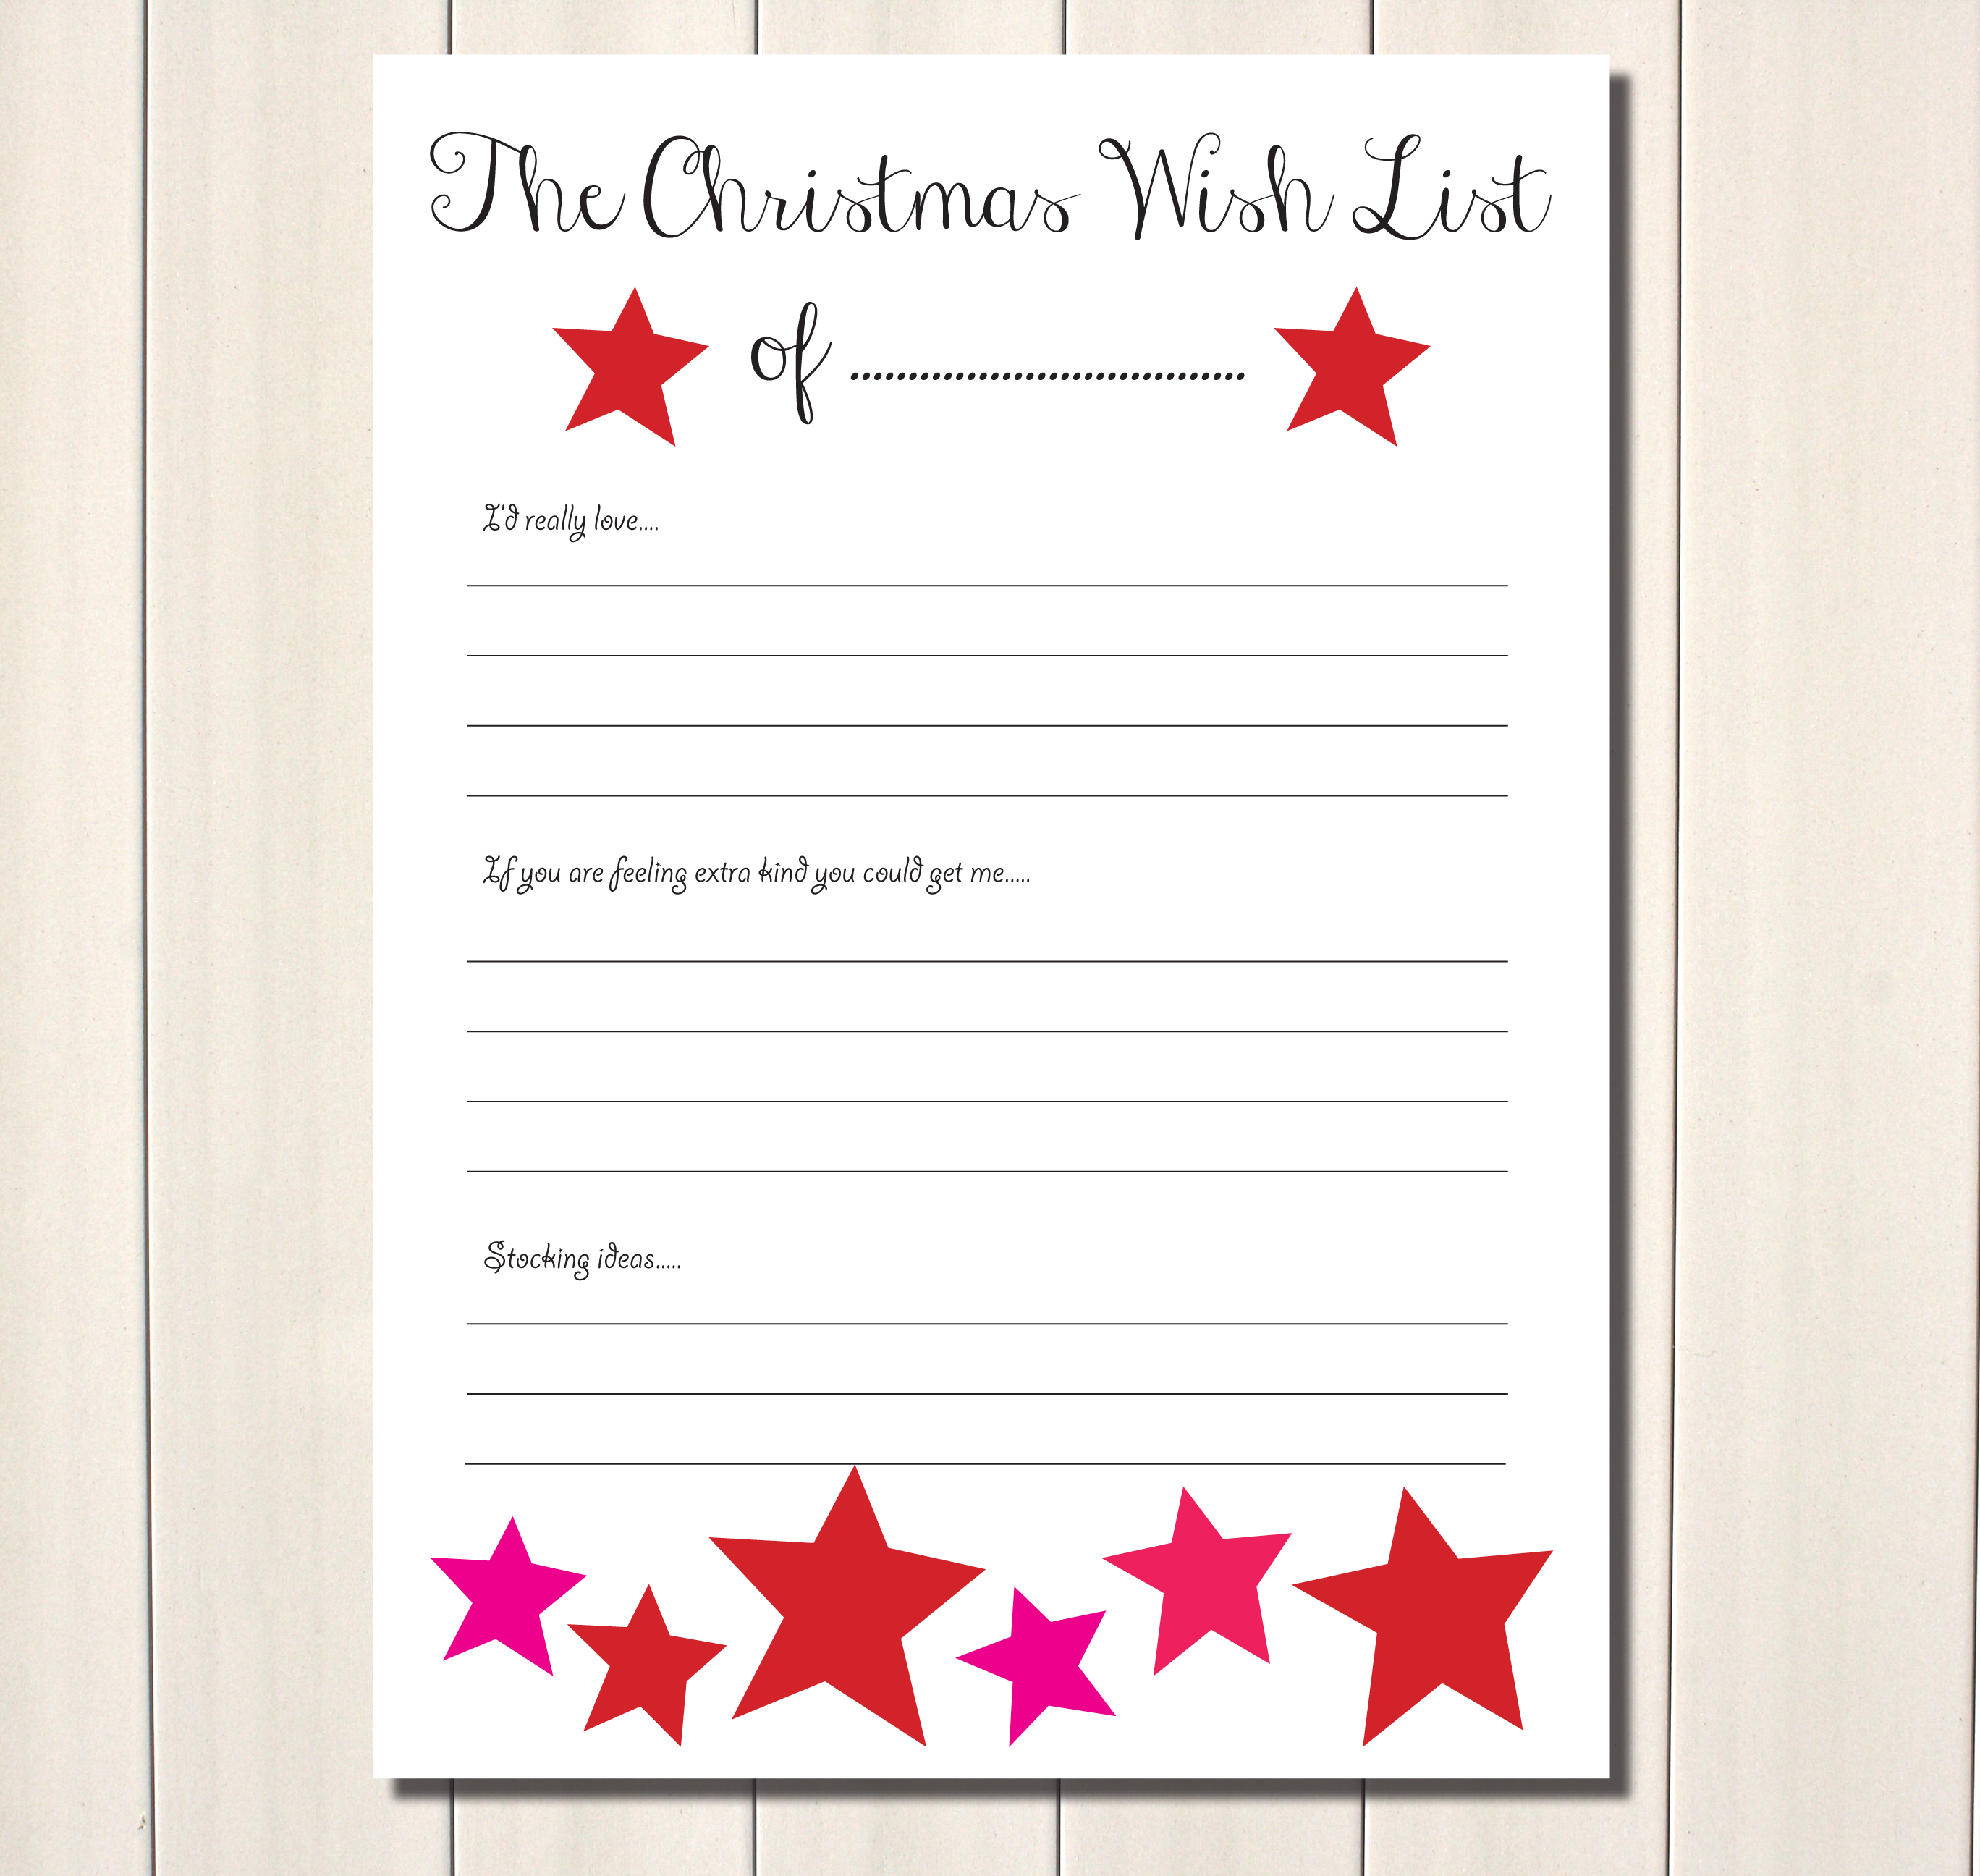 christmas-wish-list-template-free-word-templates